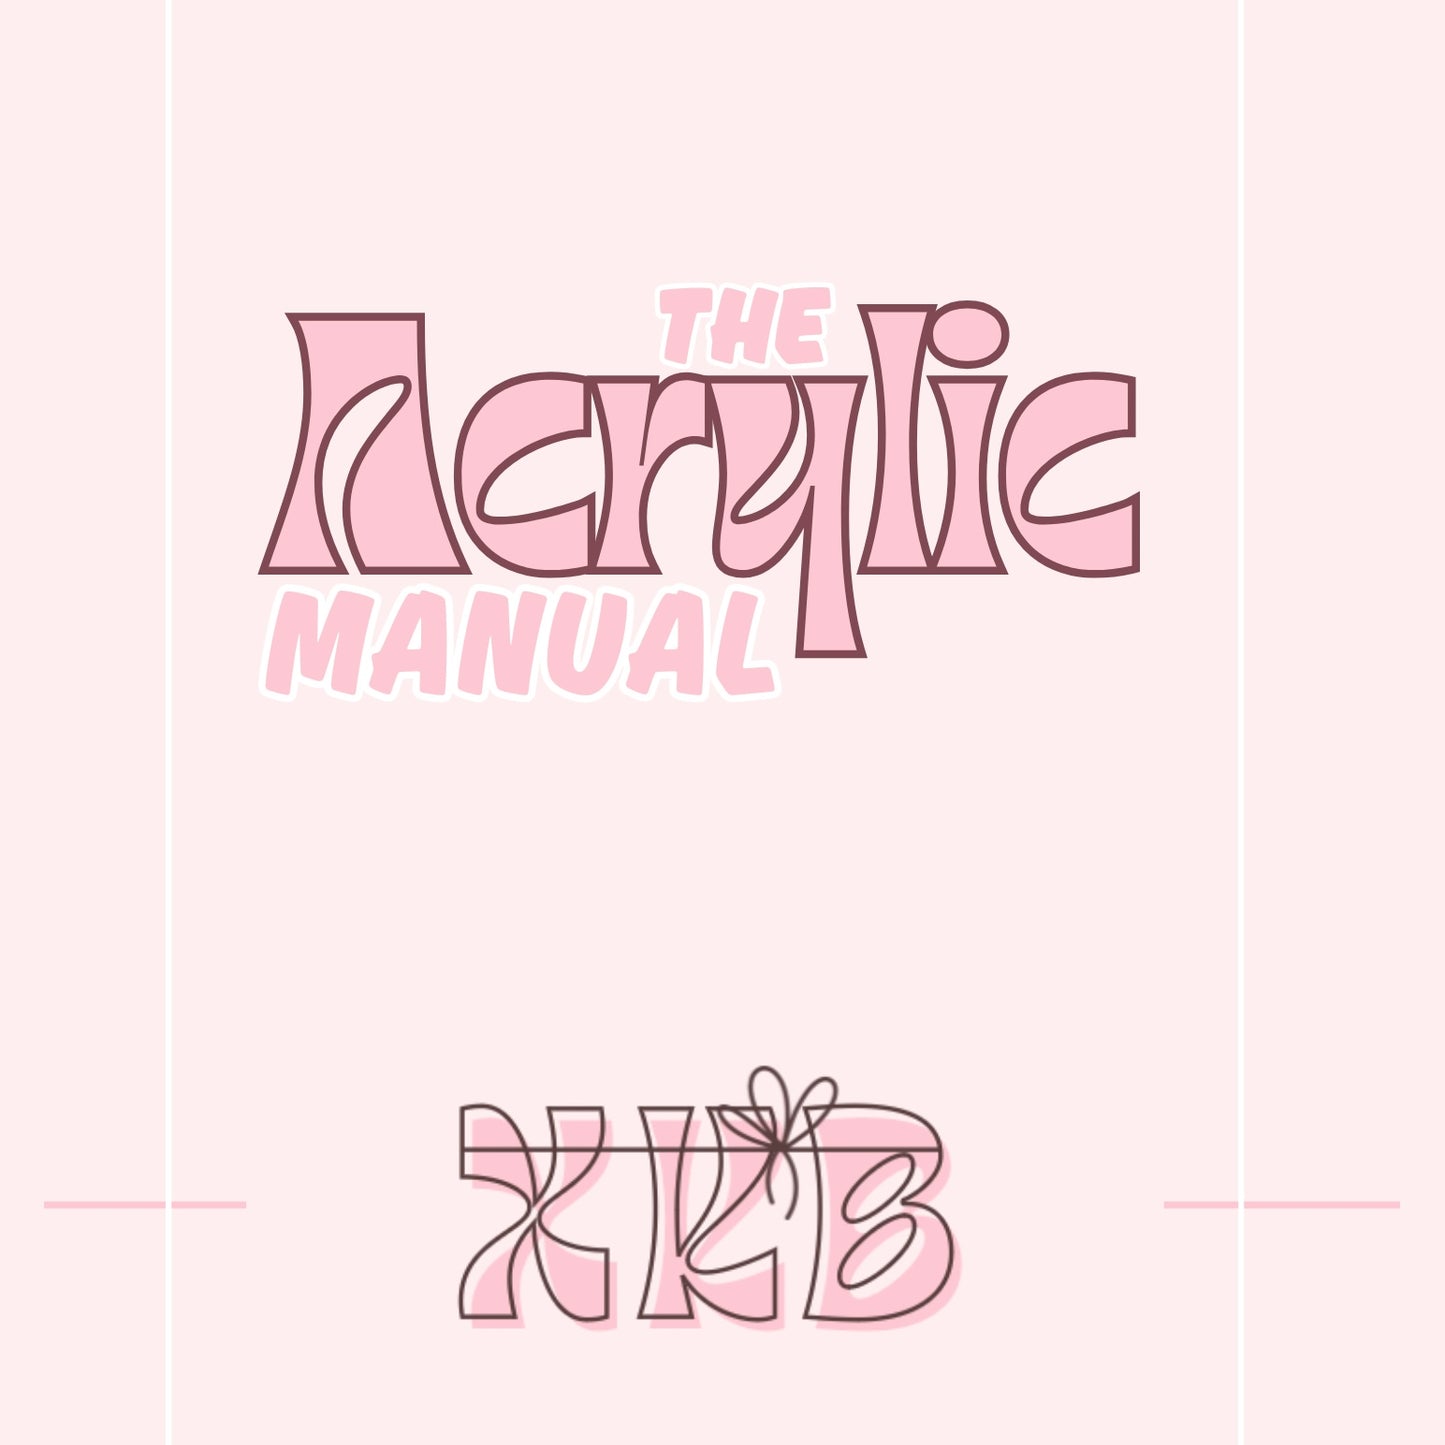 Acrylic Manual